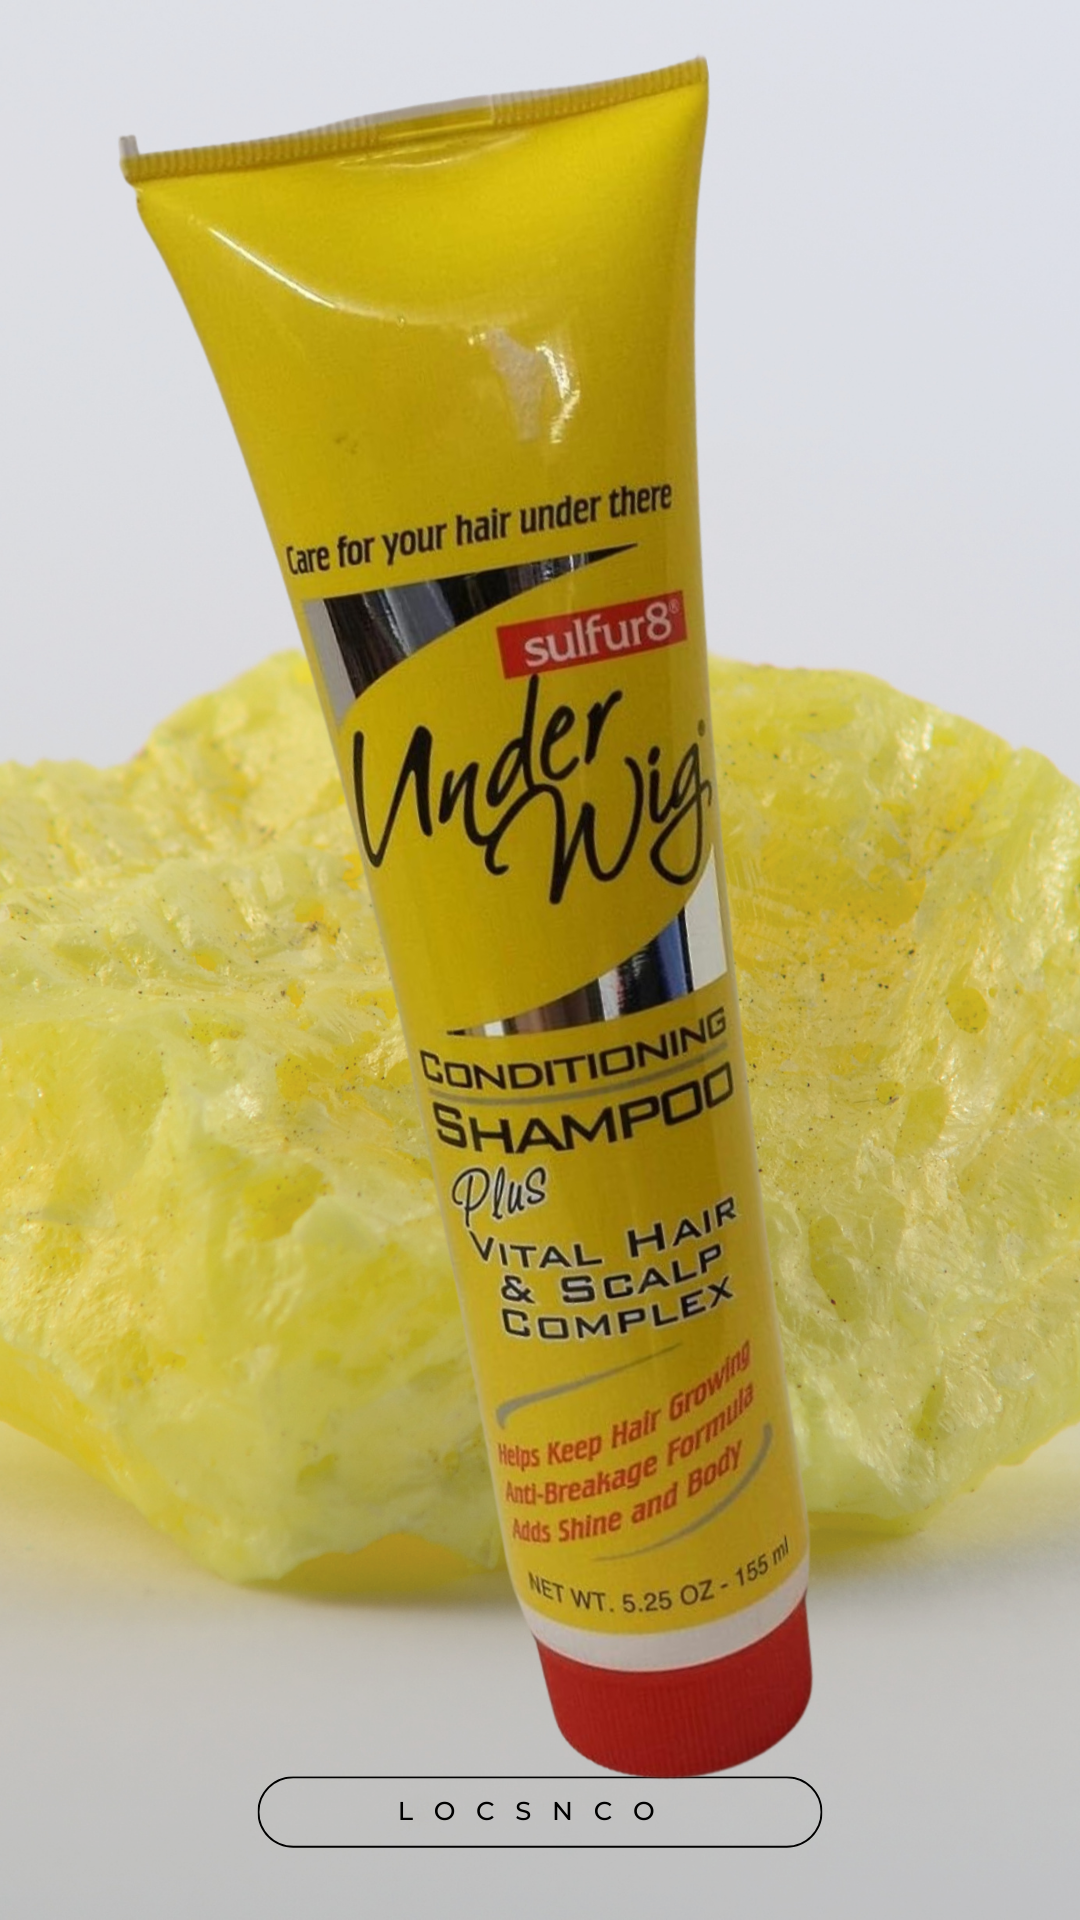 Sulfur 8 Under Wig Conditioning Shampoo